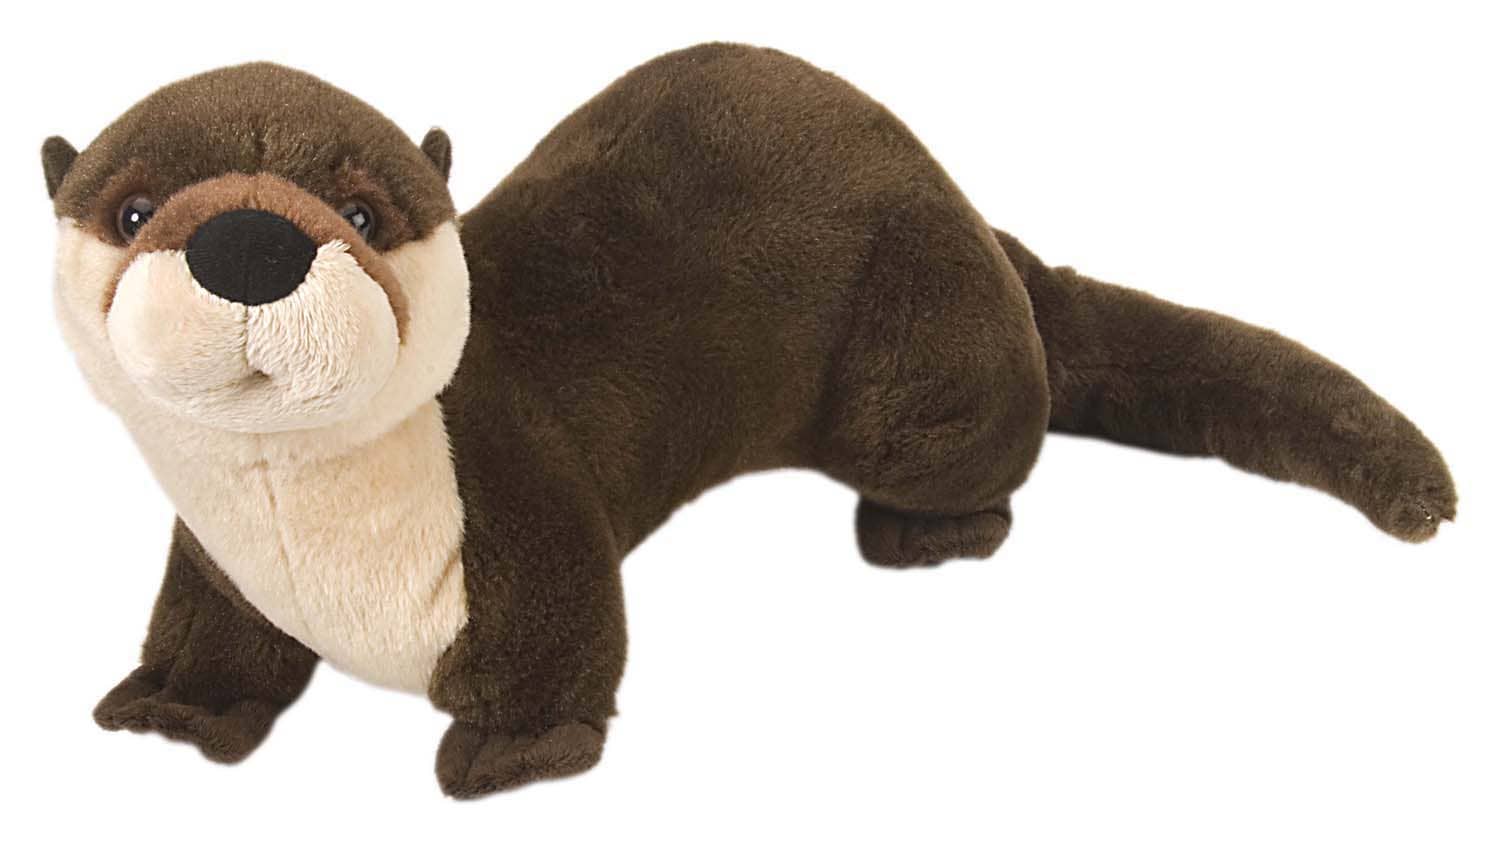 River Otter Stuffed Animal - 15"